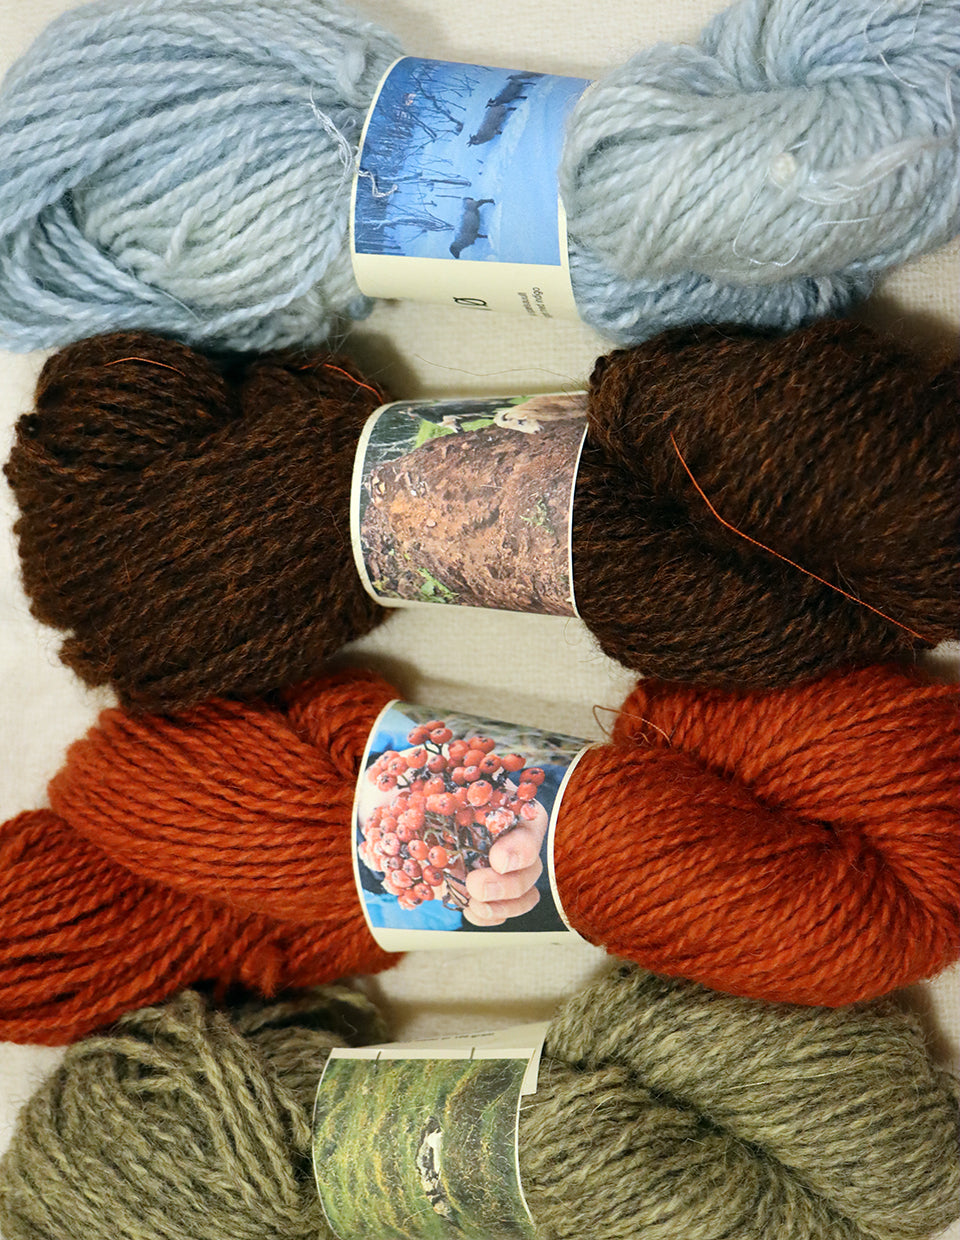 SNØ, plant-dyed yarn from white spælsau sheep